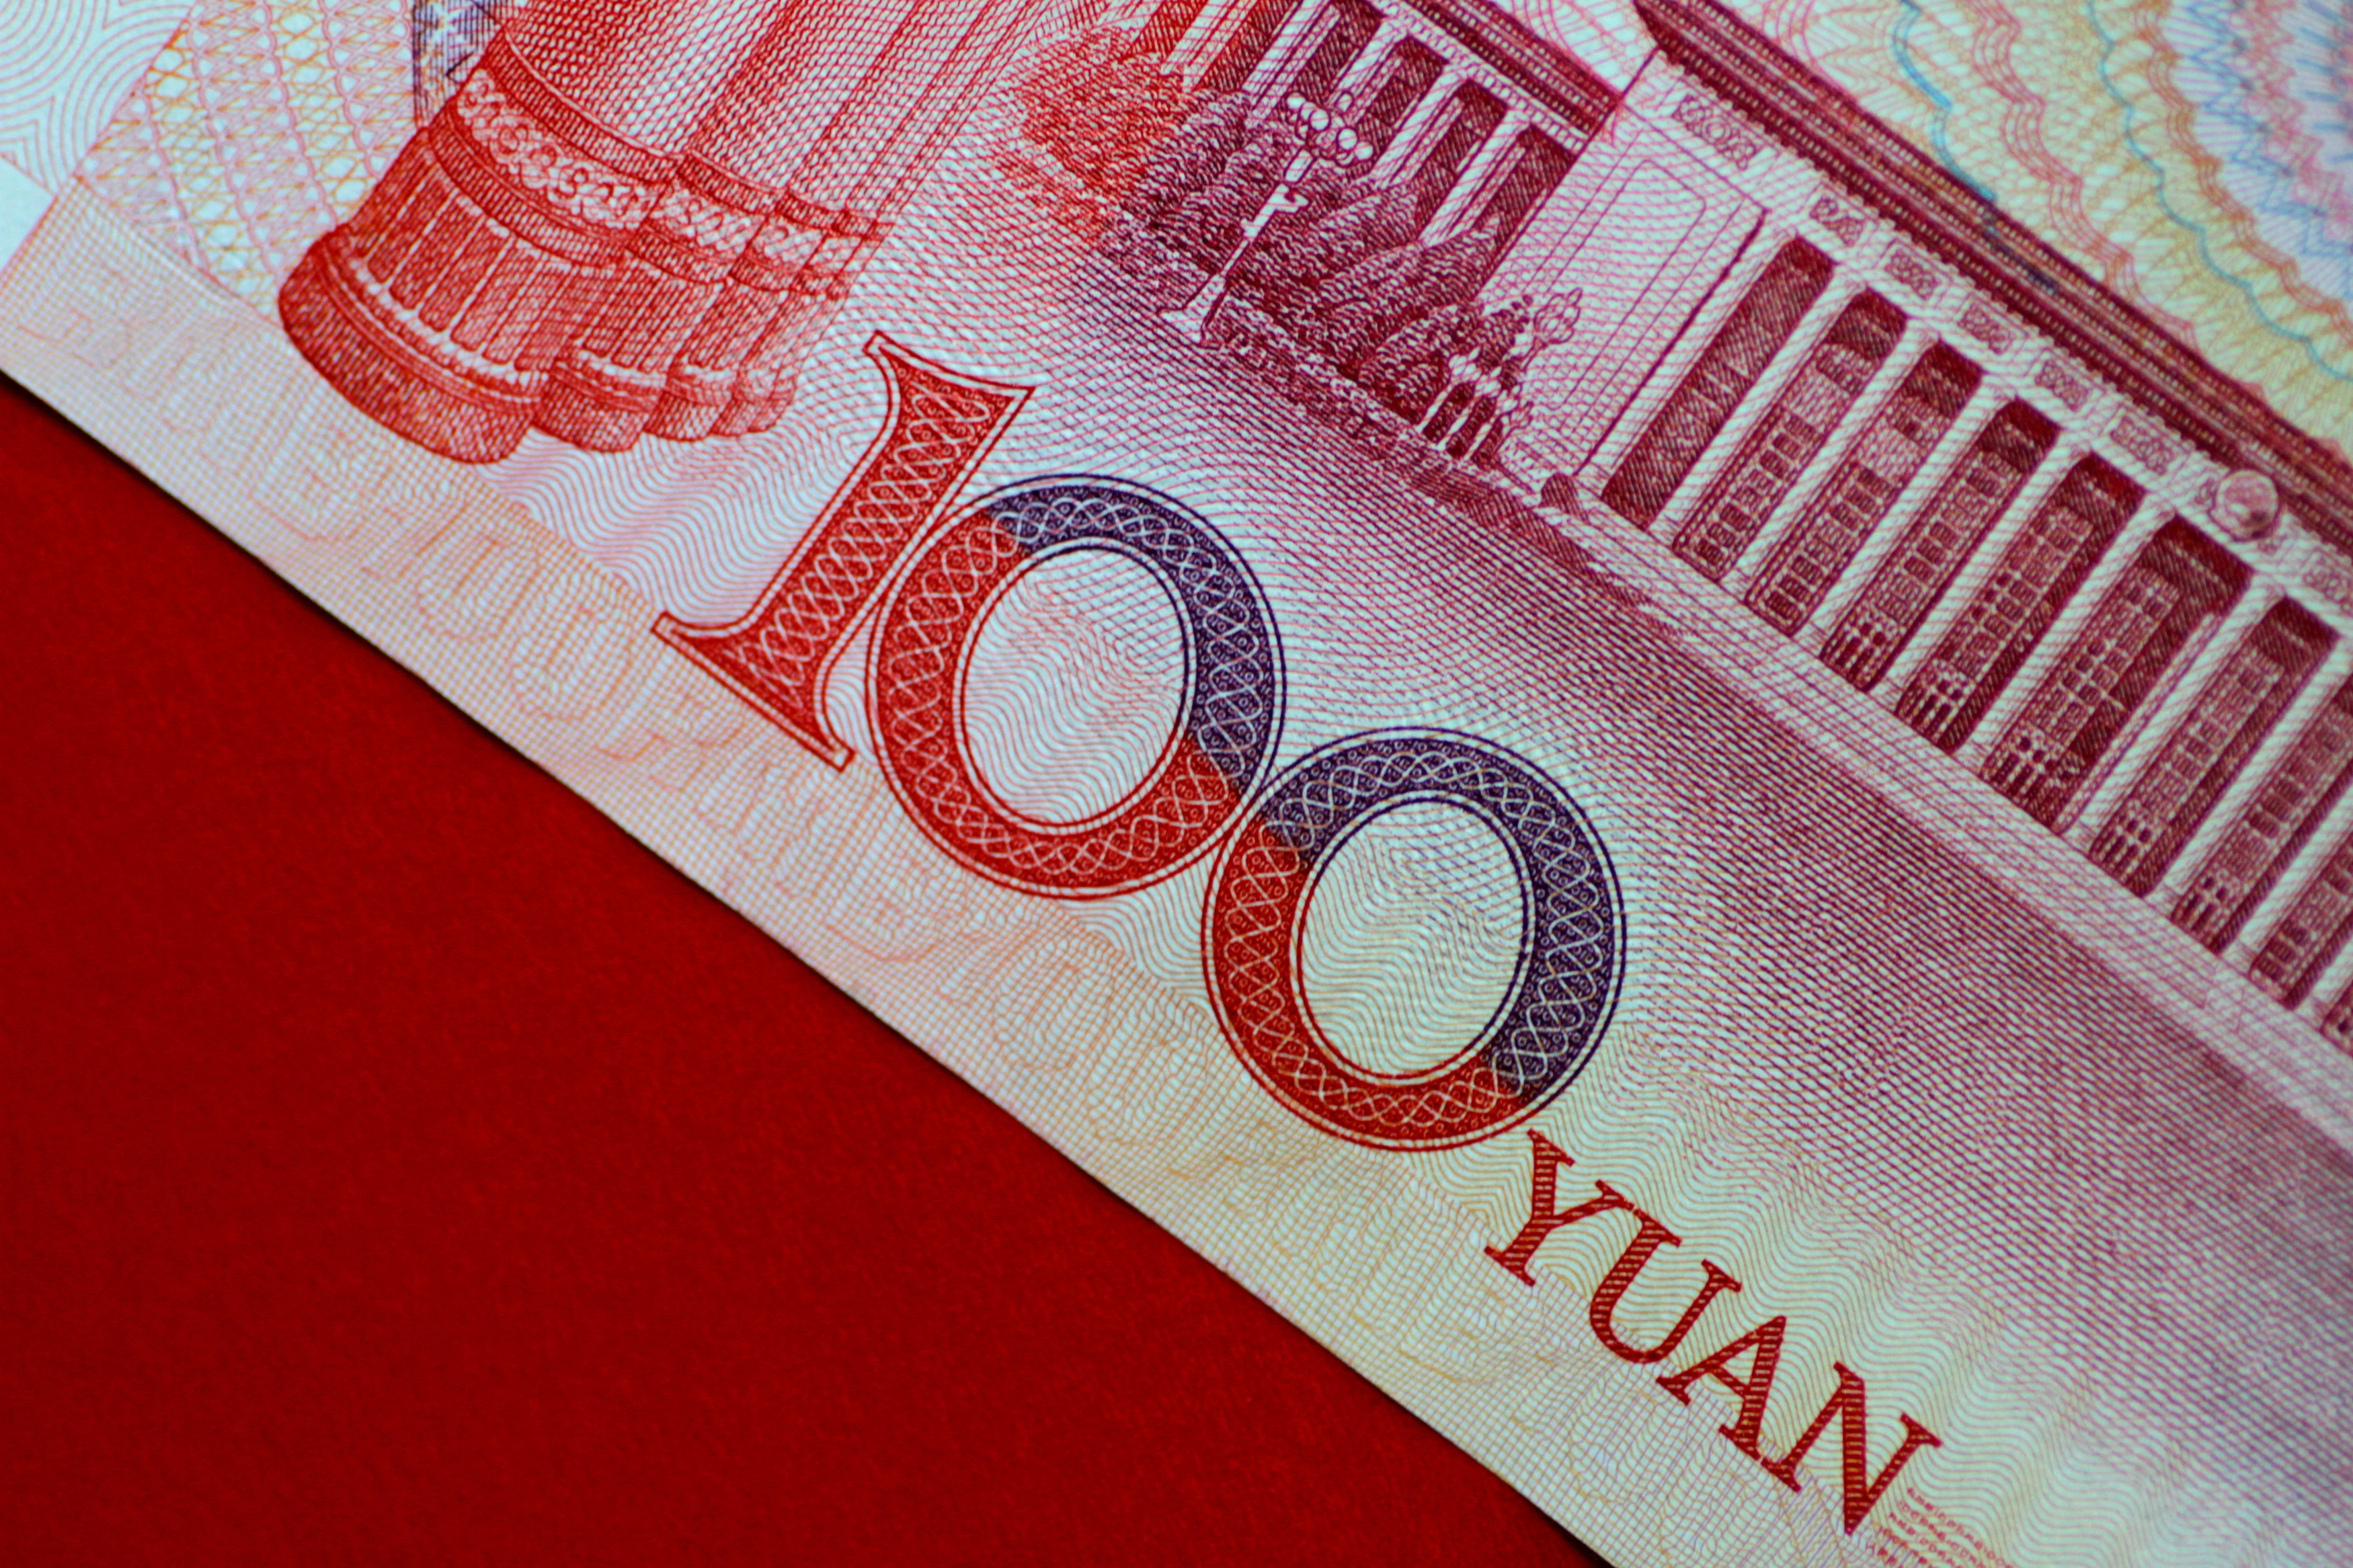 FILE PHOTO: Illustration photo of a China yuan note